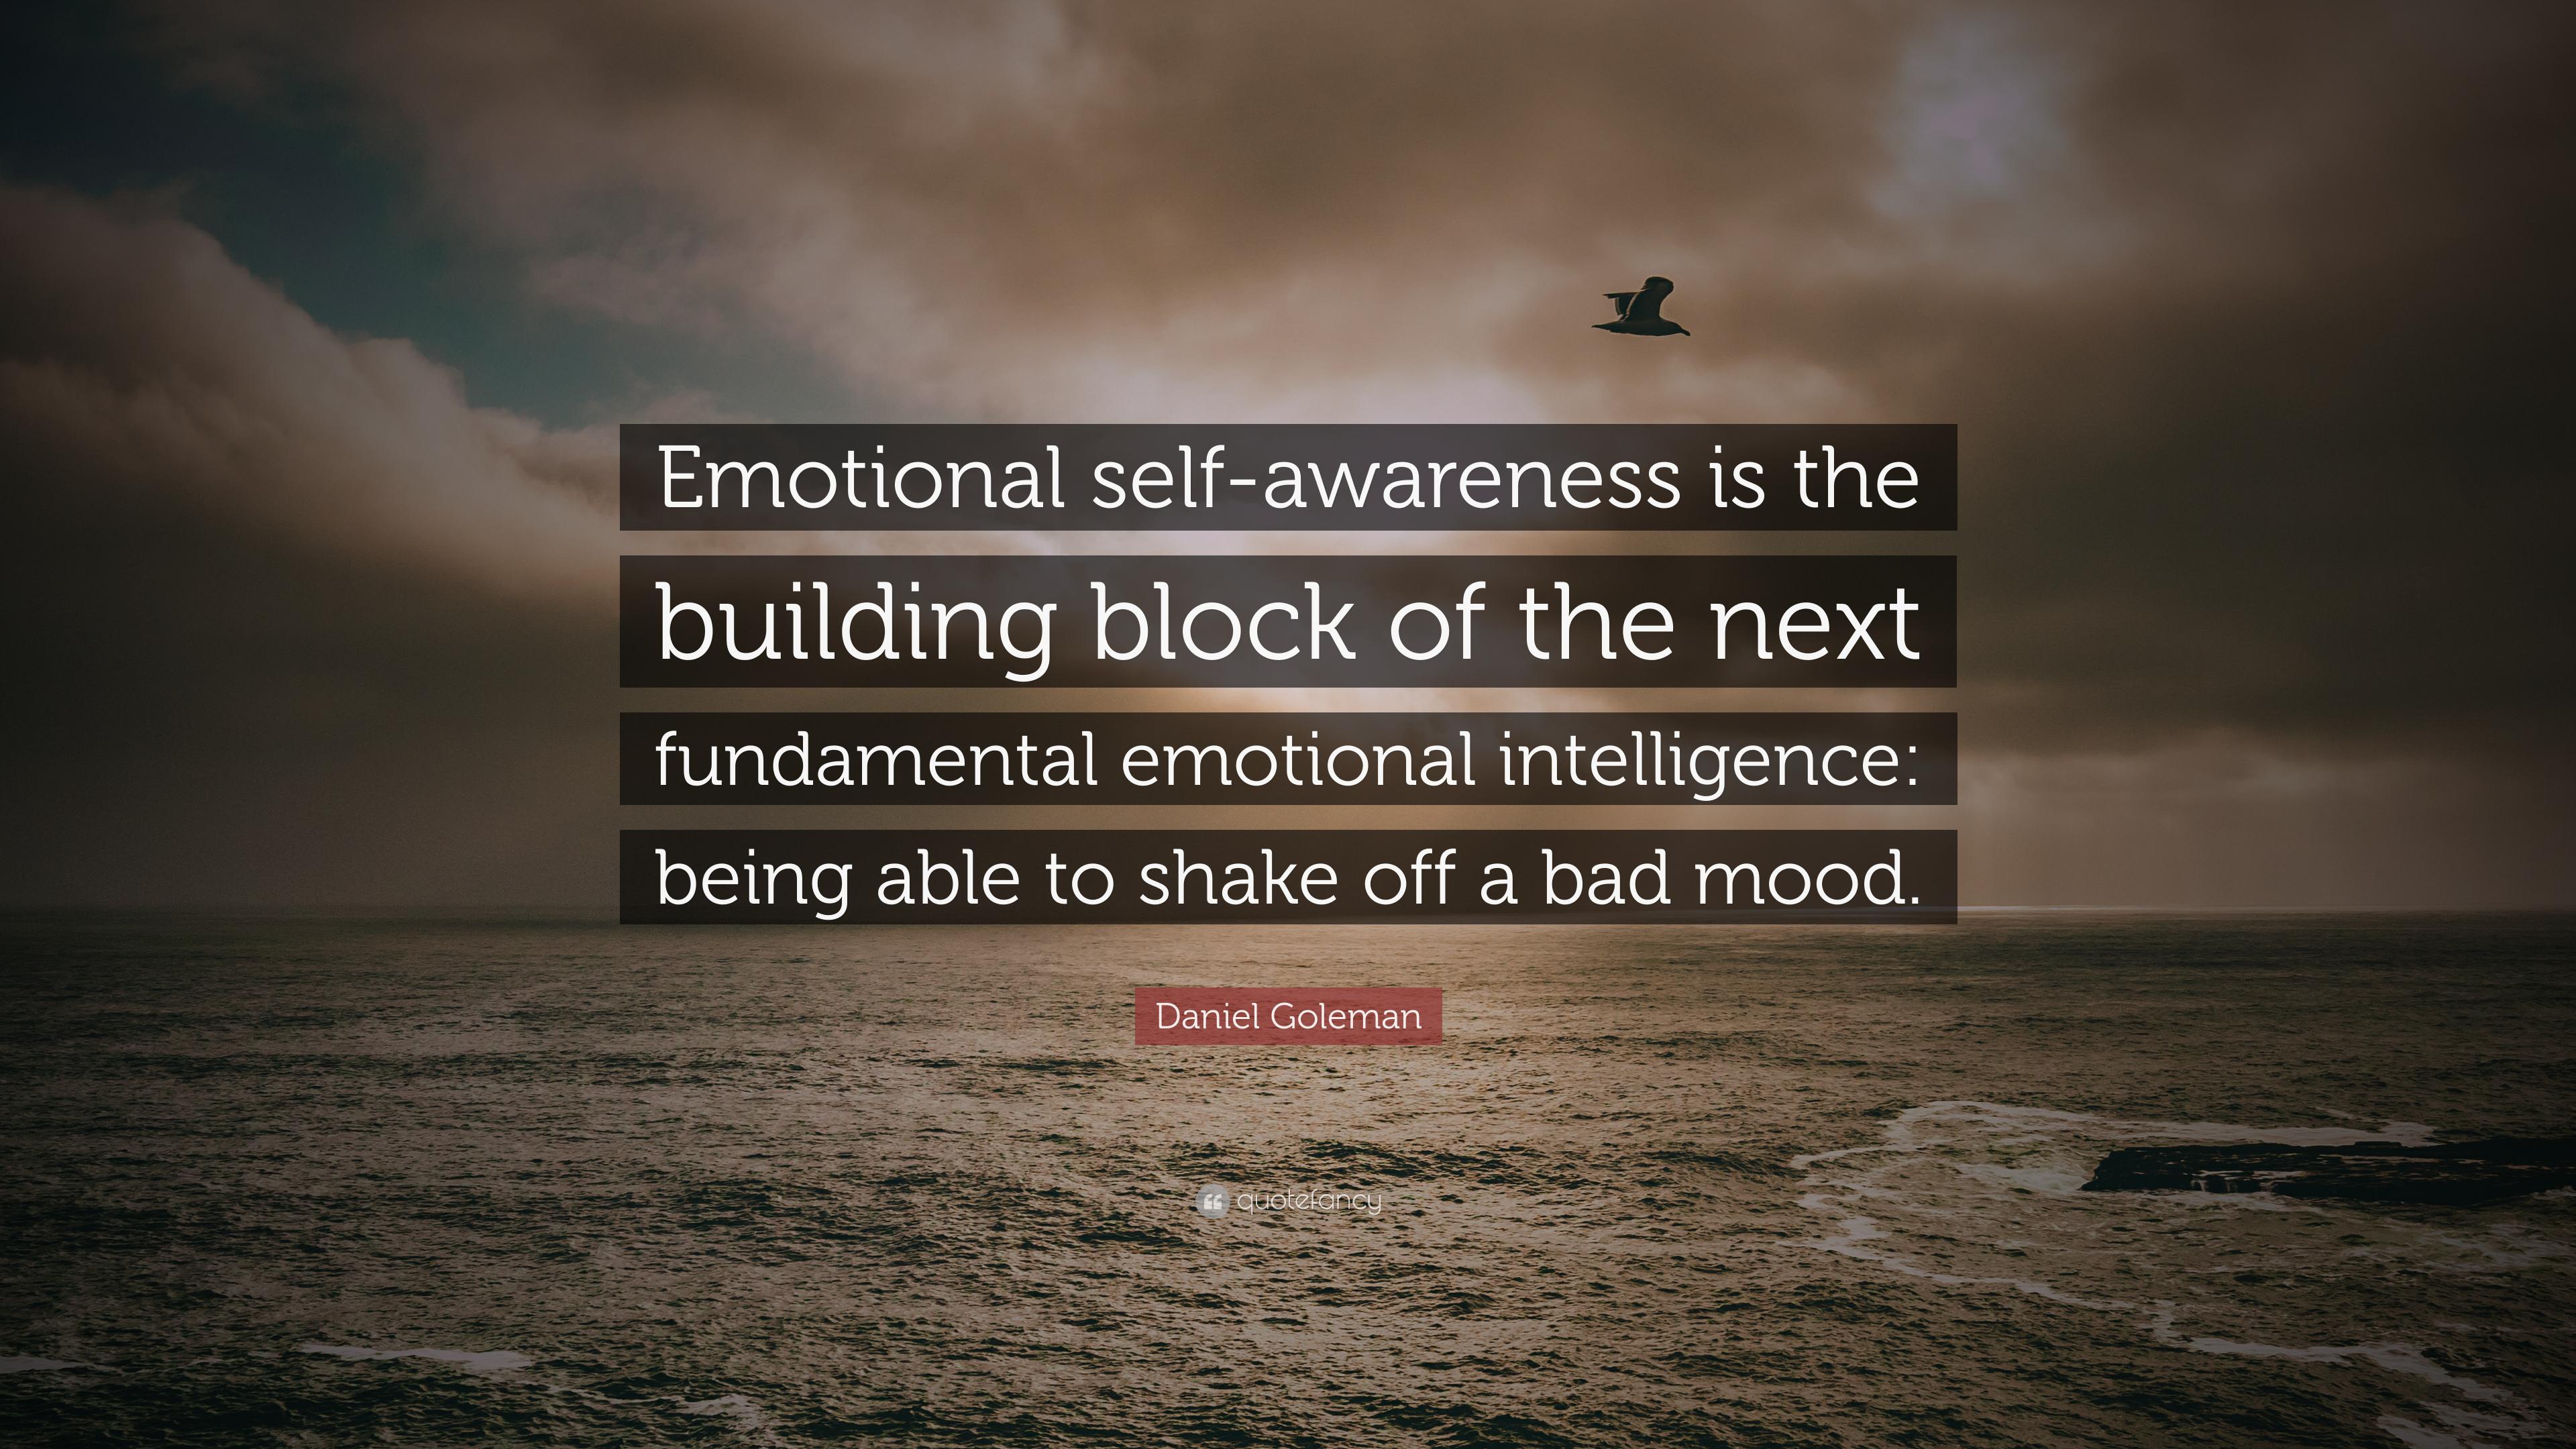 Daniel Goleman Quote: "Emotional self.